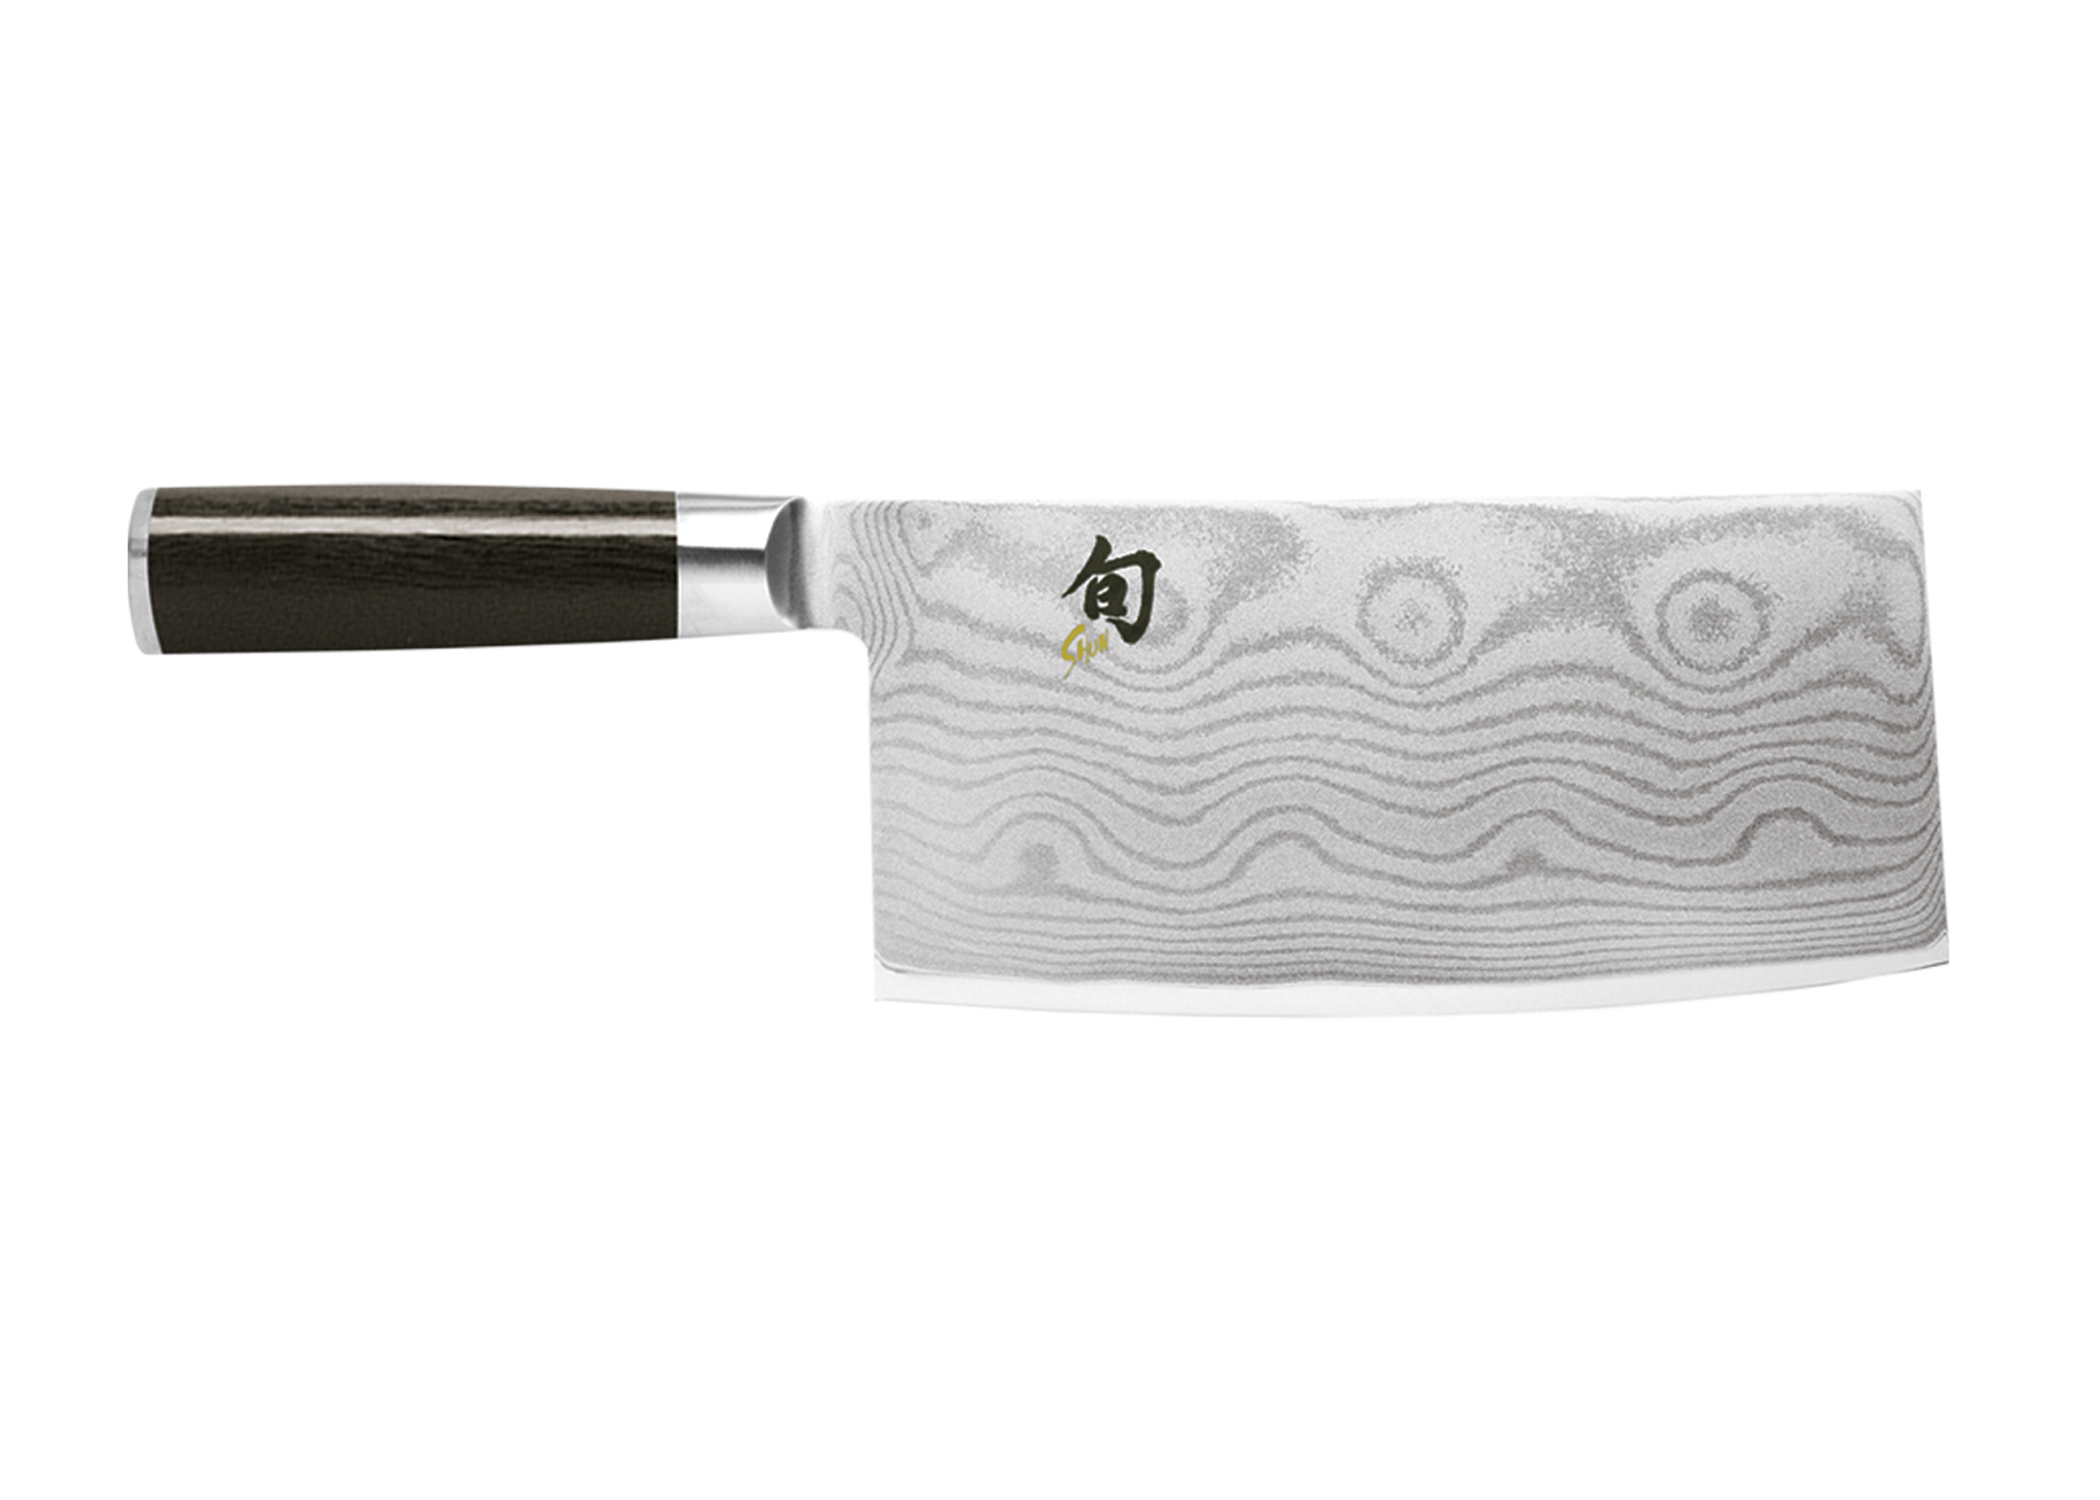 Kershaw DM0712 Shun Classic Chinese Chef Knife